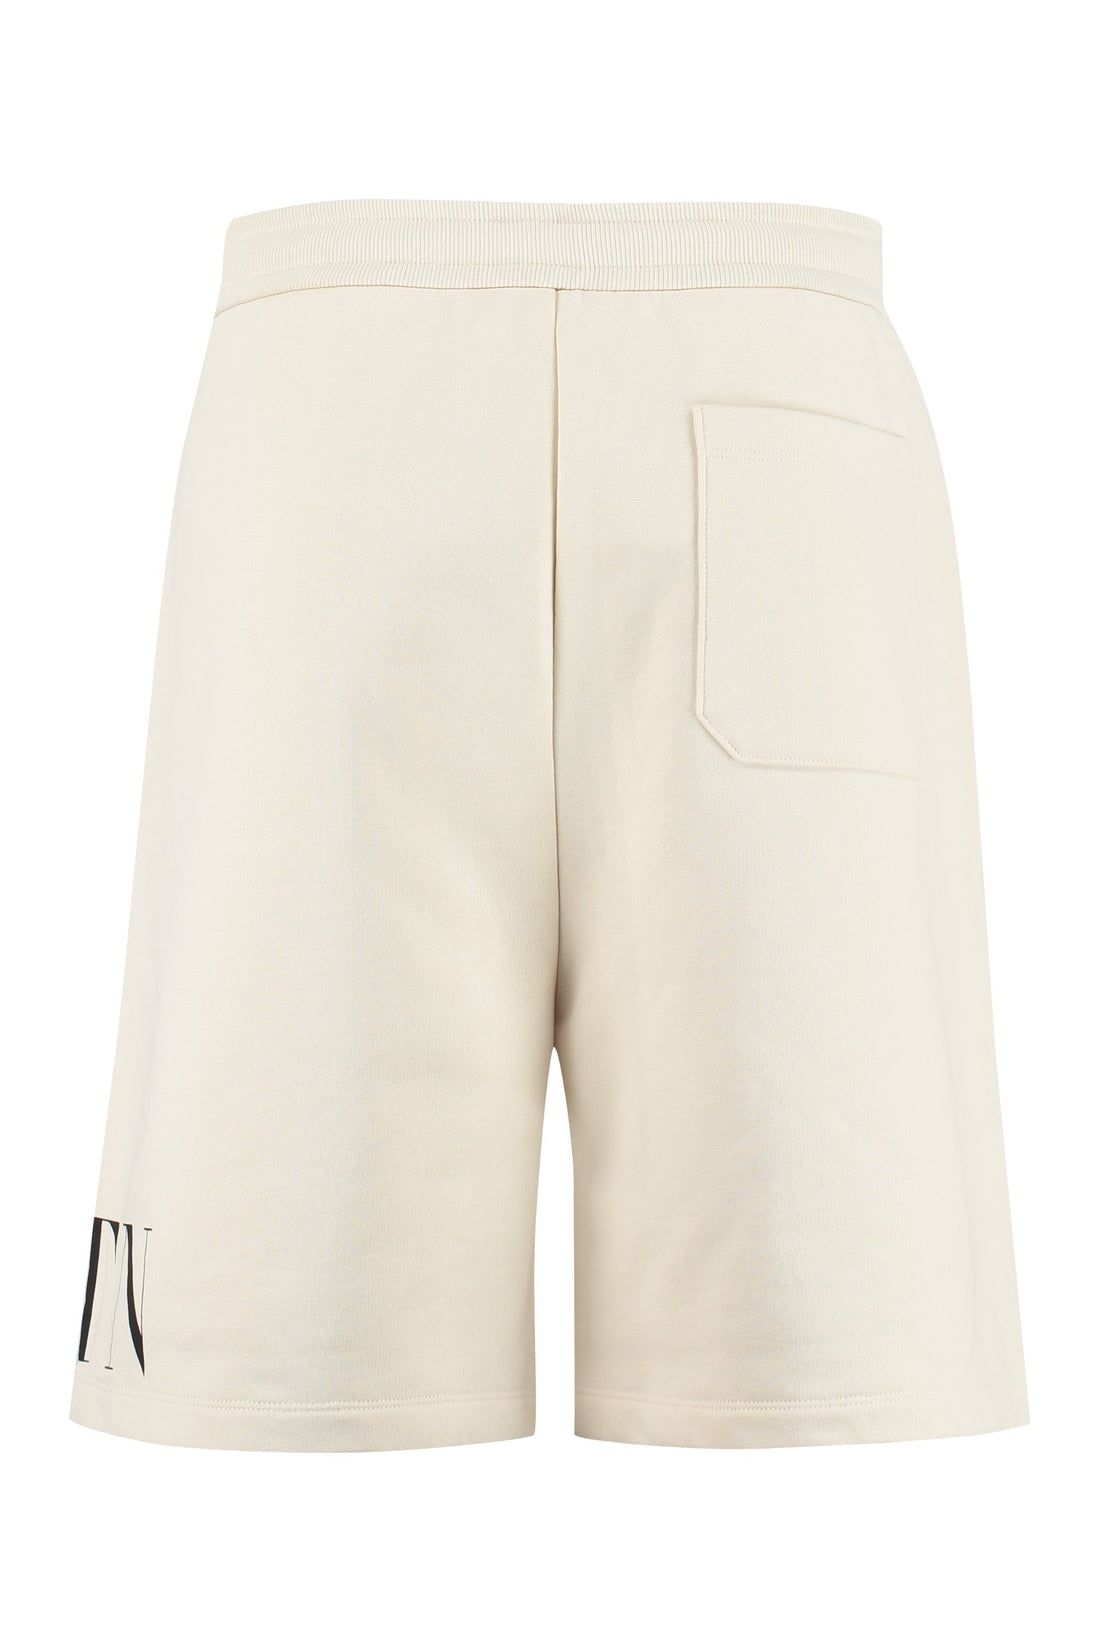 Valentino-OUTLET-SALE-Cotton bermuda shorts-ARCHIVIST